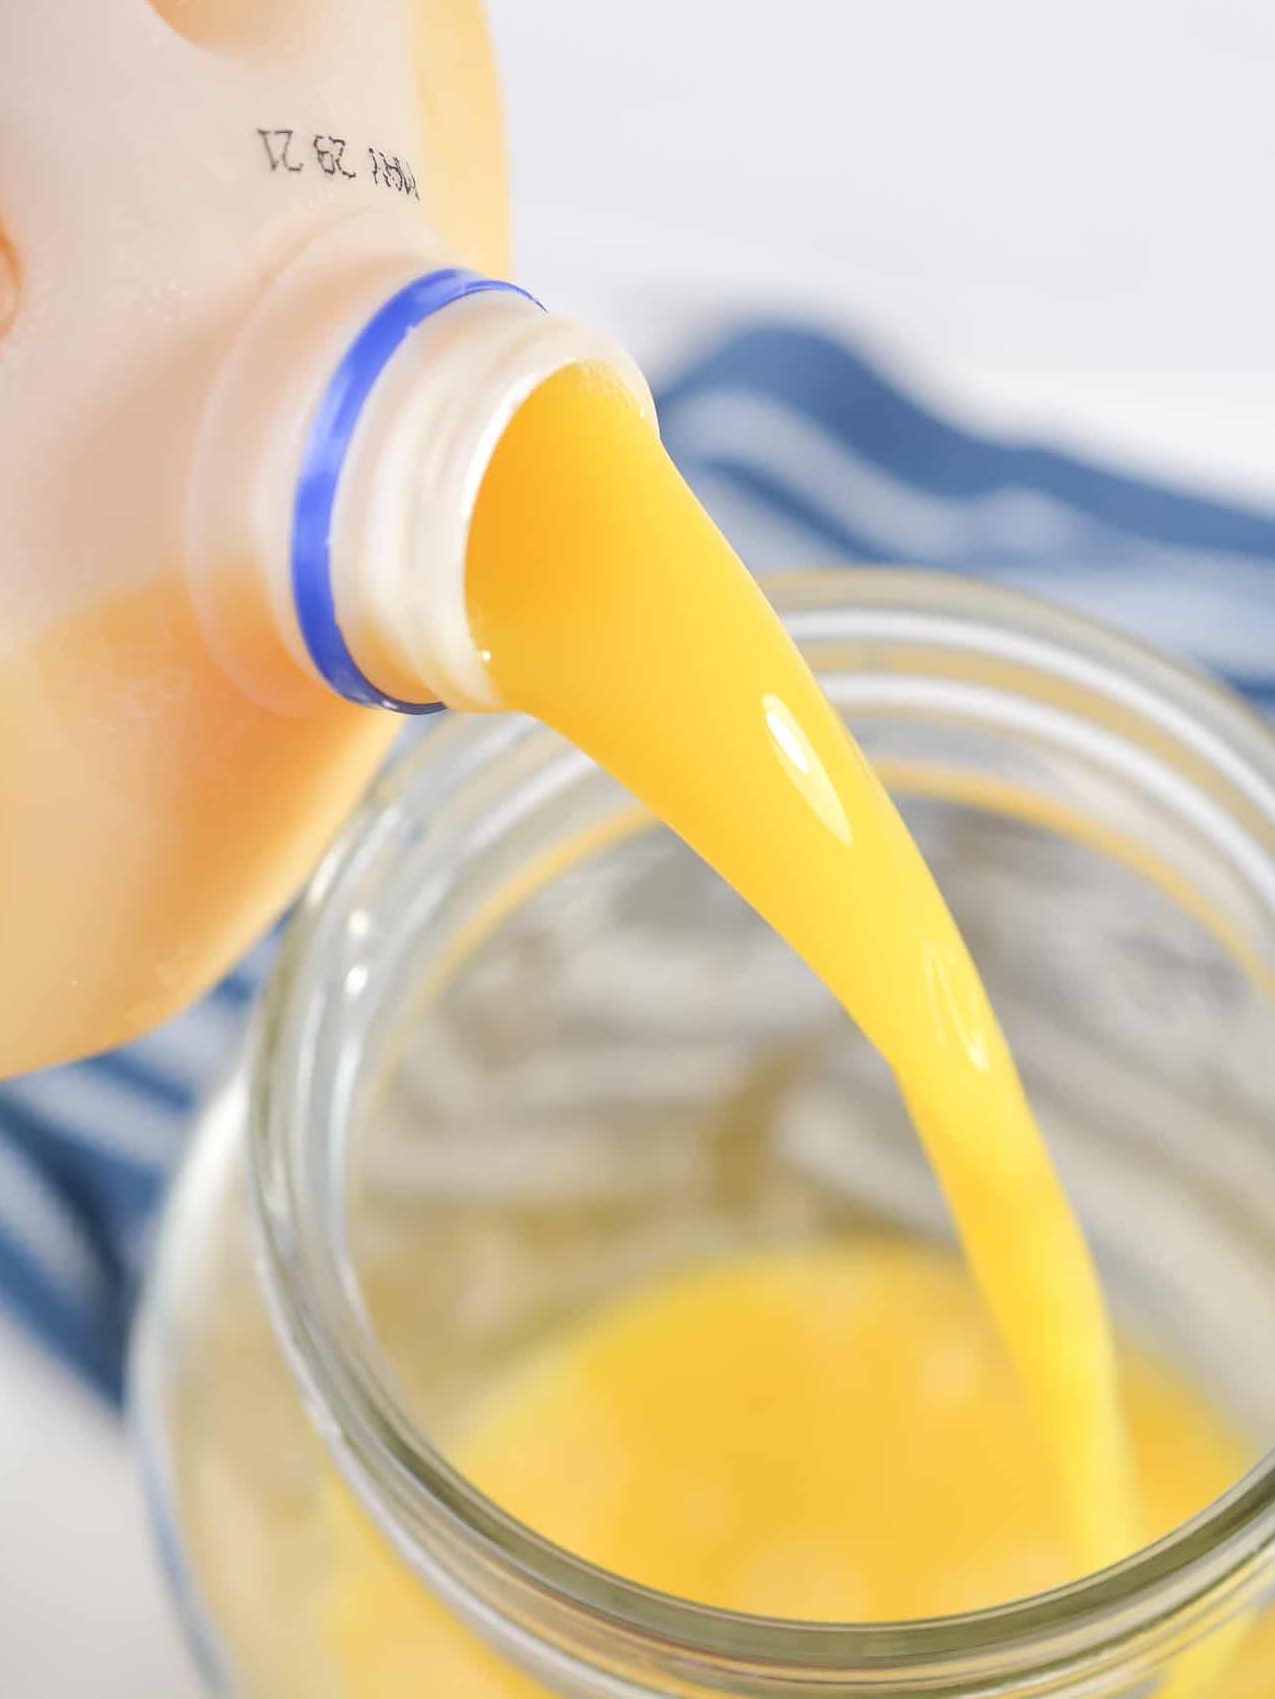 Adding orange juice with no pulp.